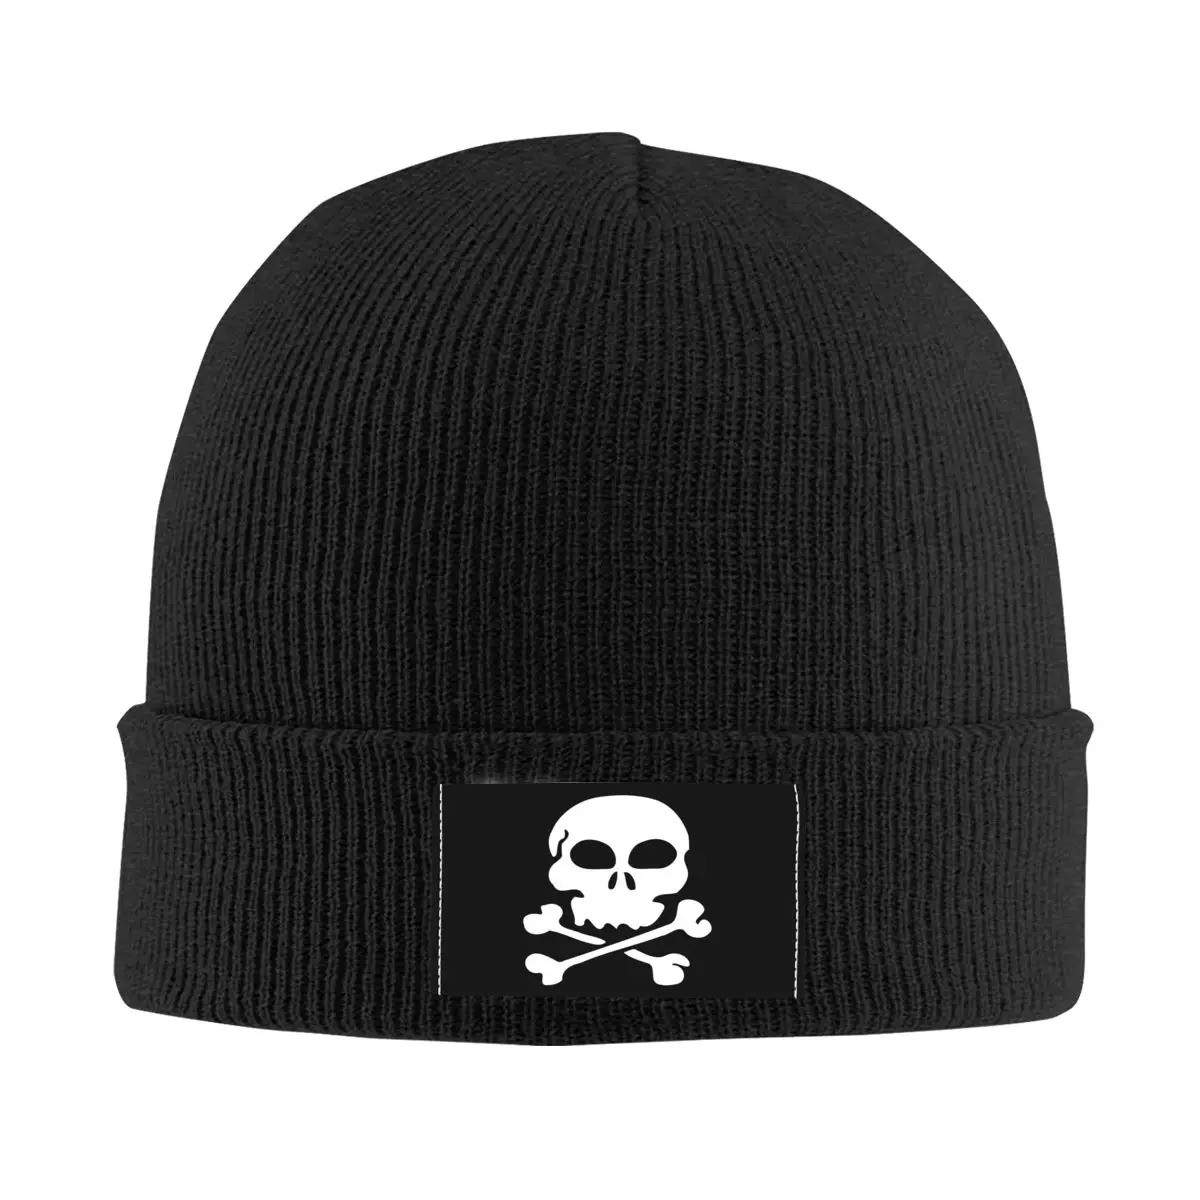 

Jolly Roger Skull Pirate Flag Skullies Beanies Caps Cool Winter Warm Women Men Knit Hat Adult Unisex Bonnet Hats